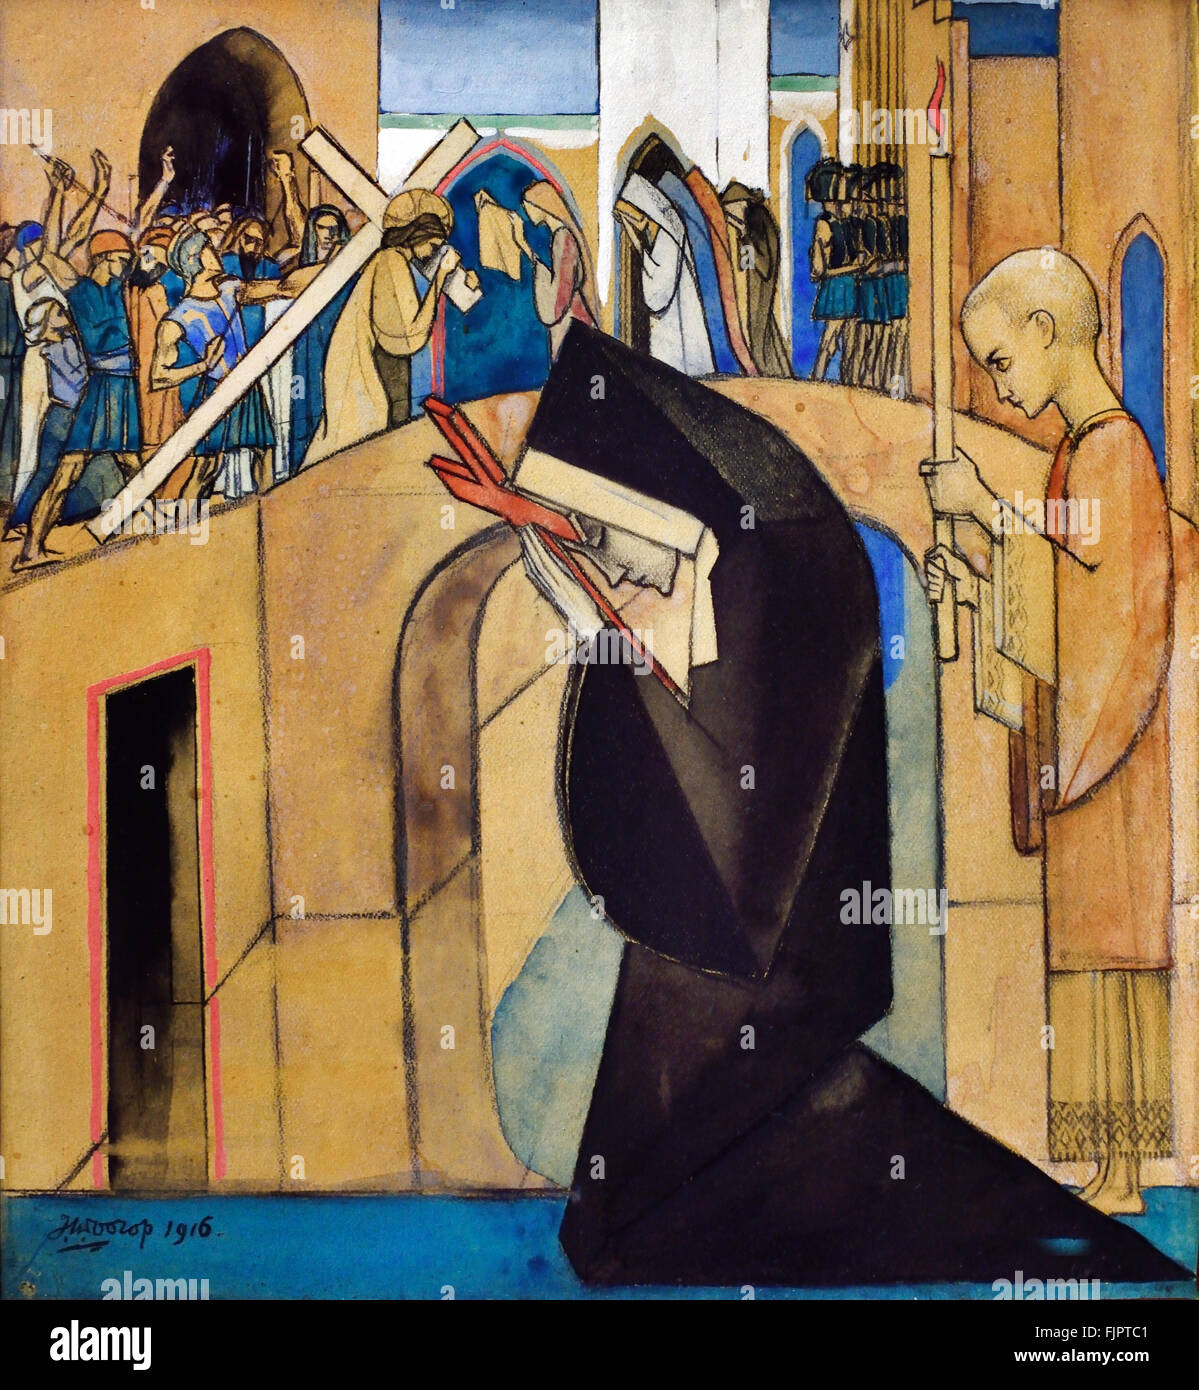 Veronica 1916 Jan Toorop ( Johannes Theodorus Toorop ) 1858 - 1928 pintor holandés indonesio simbolismo - Art Nouveau - Pointillism ( Amsterdam Impresionismo movimiento. Holanda Holandesa Indonesia ) Foto de stock